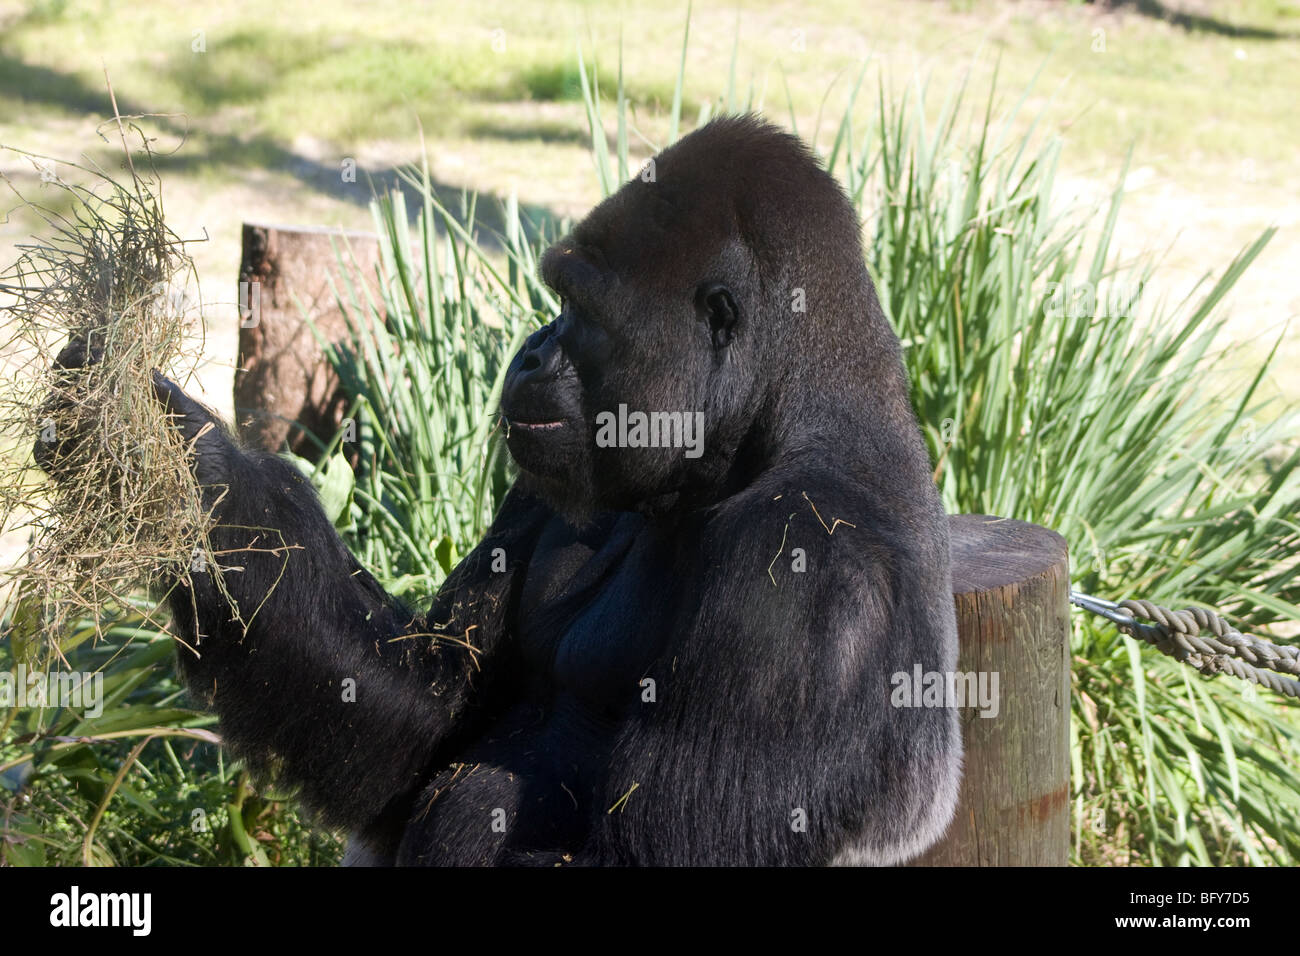 gorilla eating Stock Photo